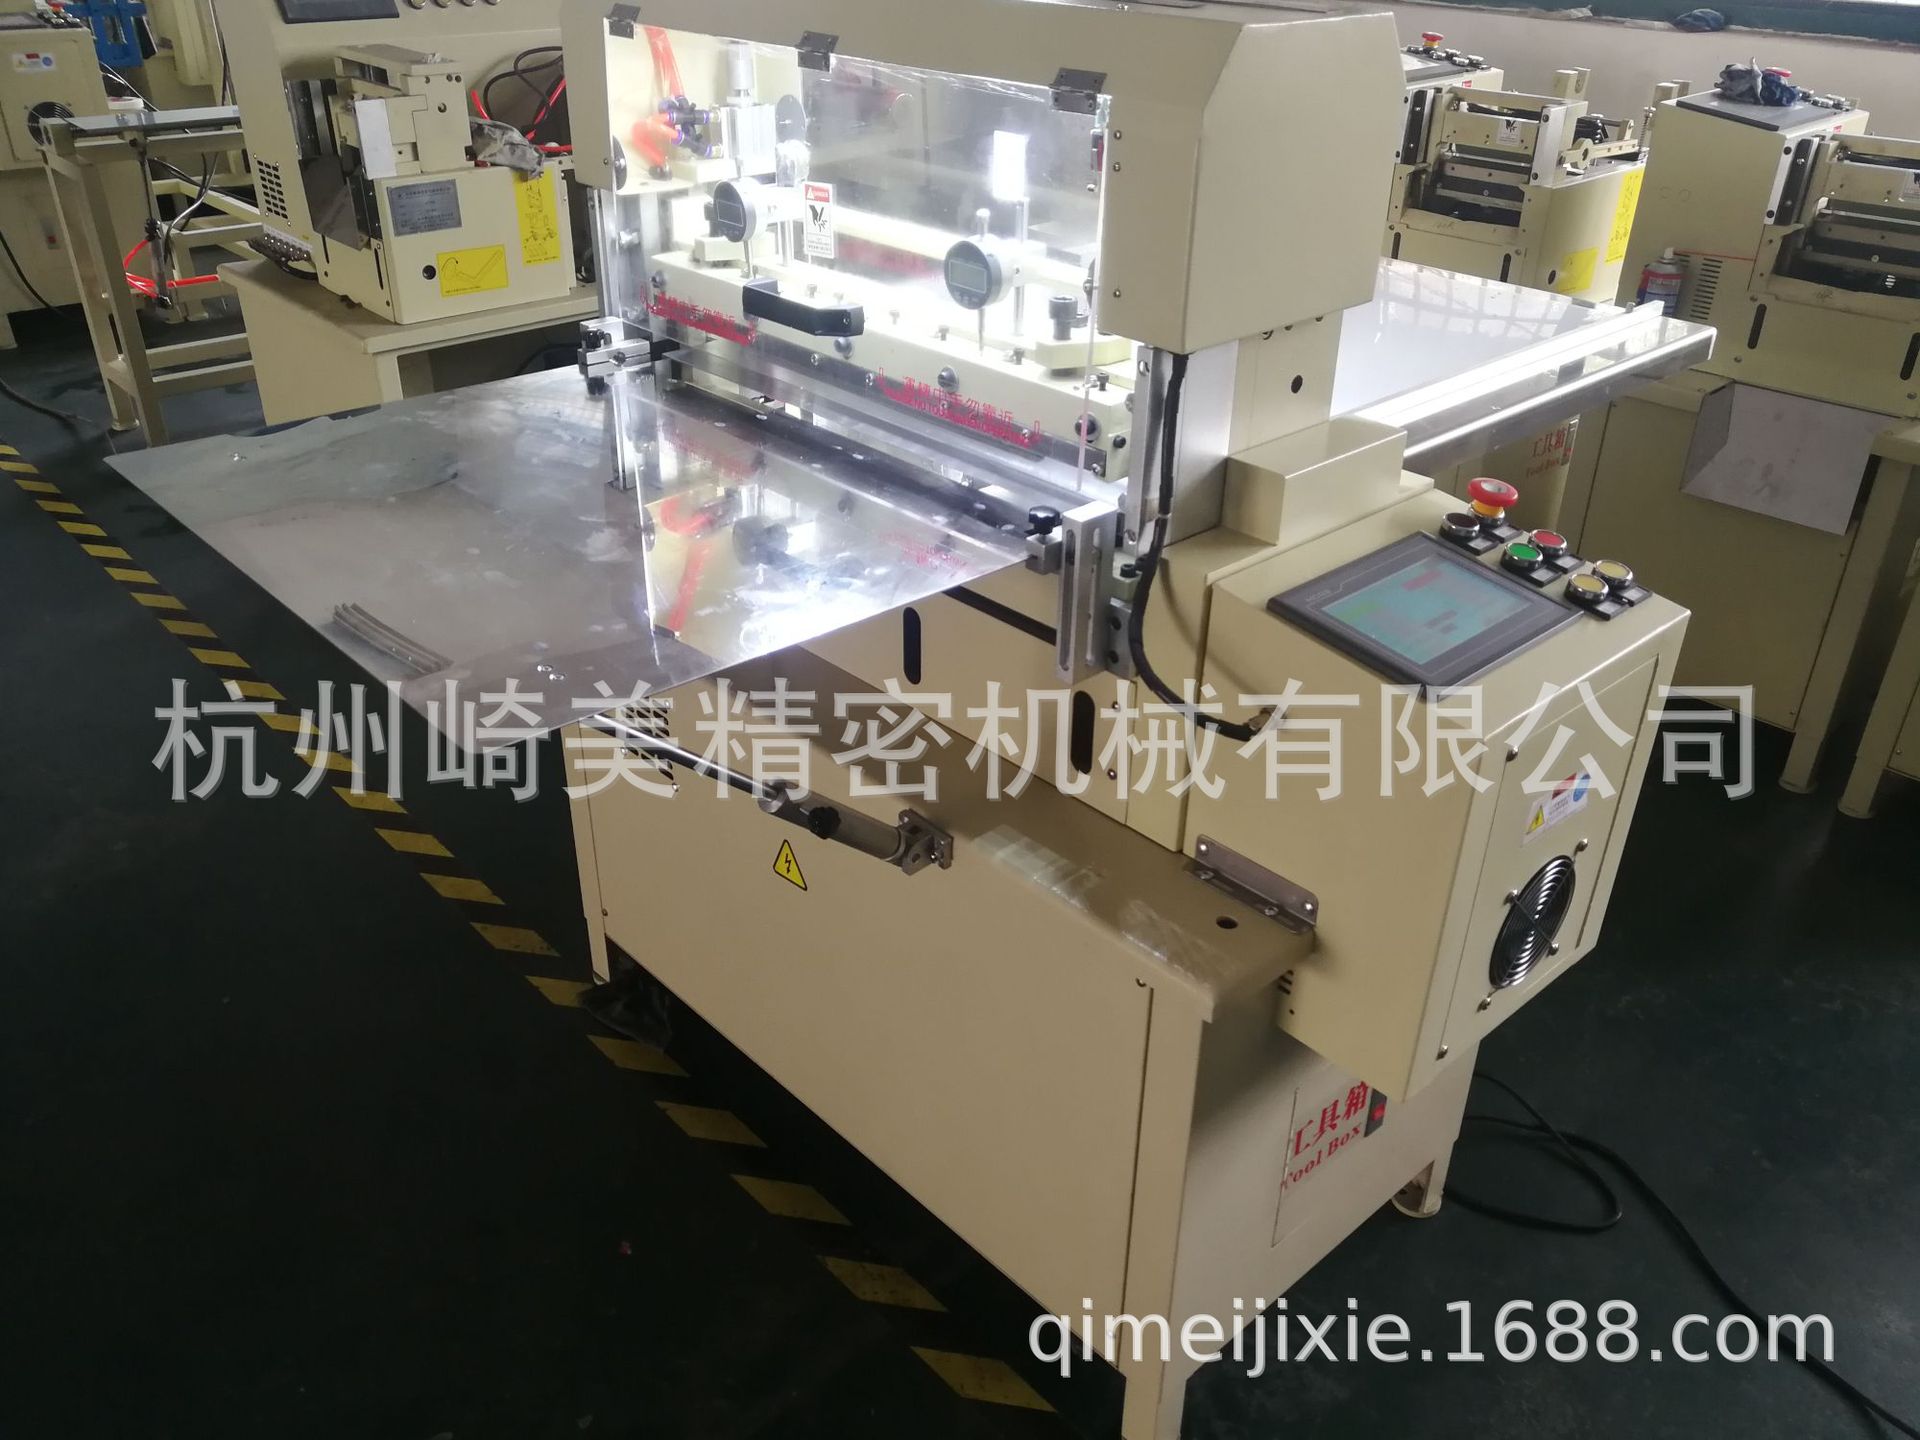 automatic Cutting machine Hangzhou Manufactor customized Precise Cutting machine Semi completely broken type)Vertical and horizontal cutting machine